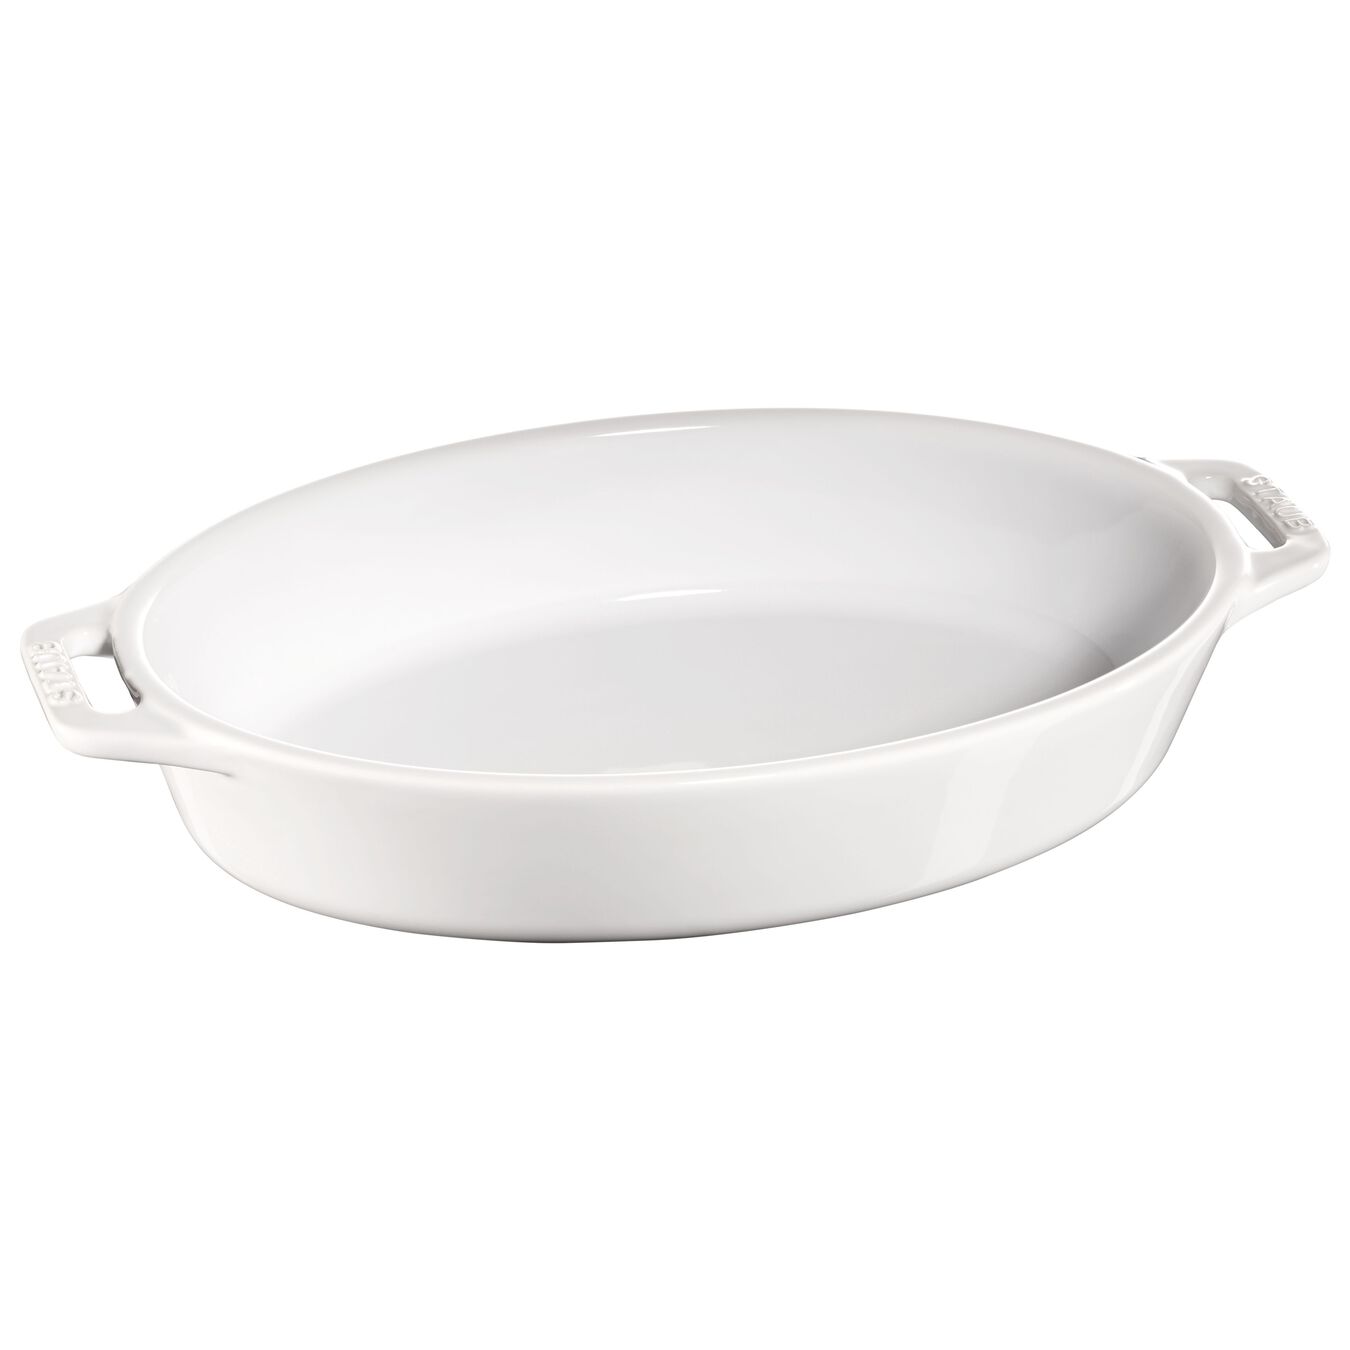 Staub - Oval Dish - Ceramic - White - 23cm